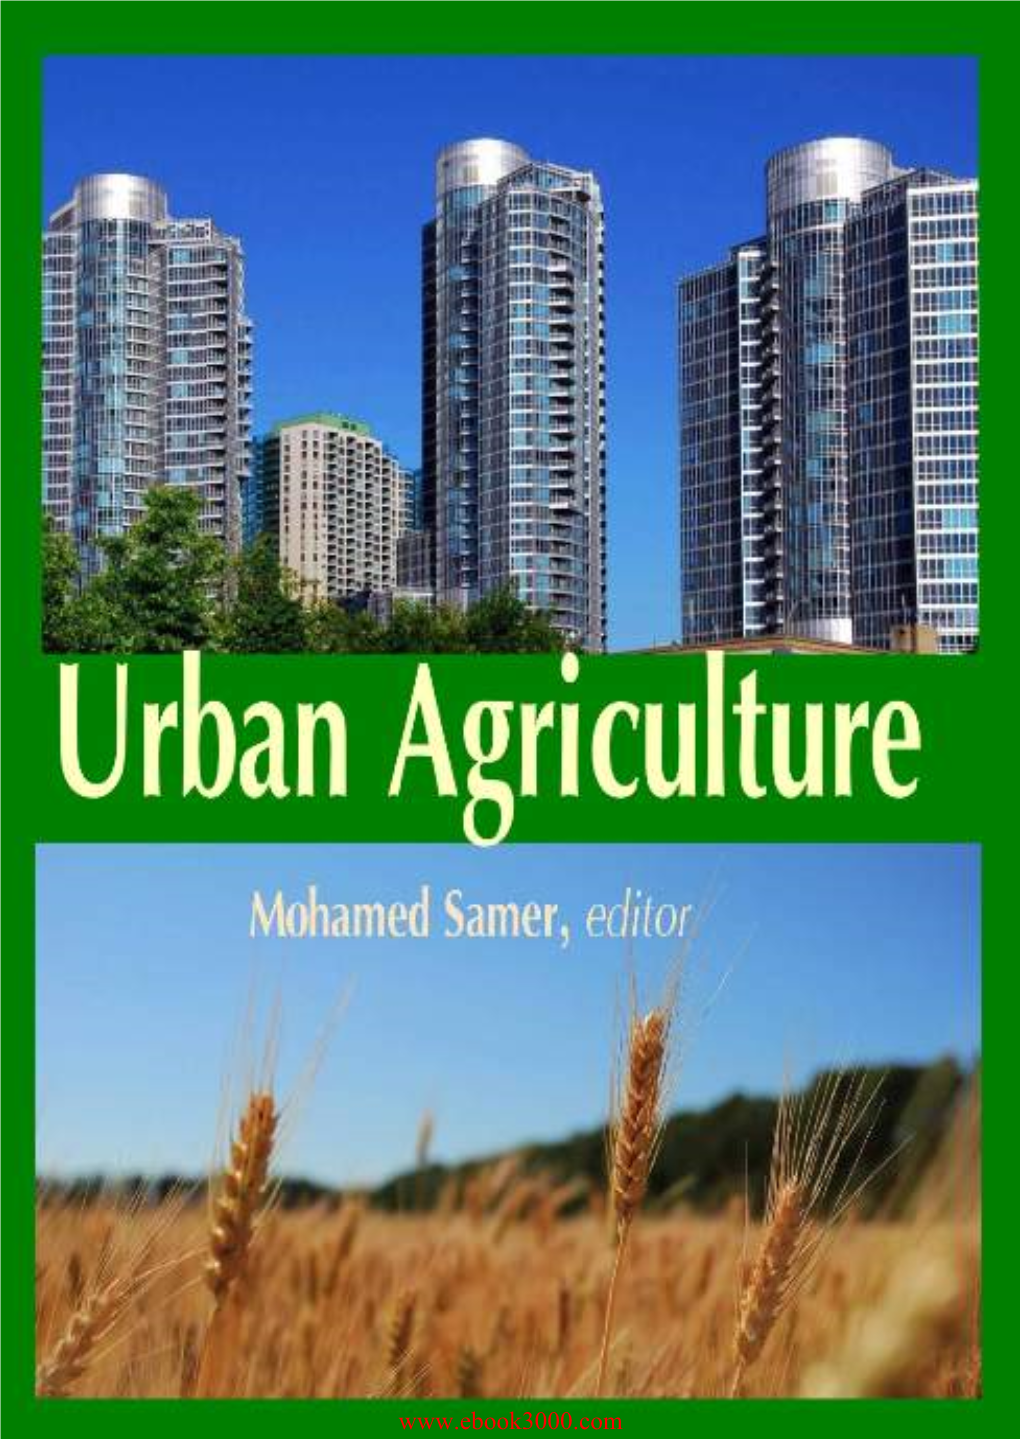 Urban Agriculture by Mohamed Samer